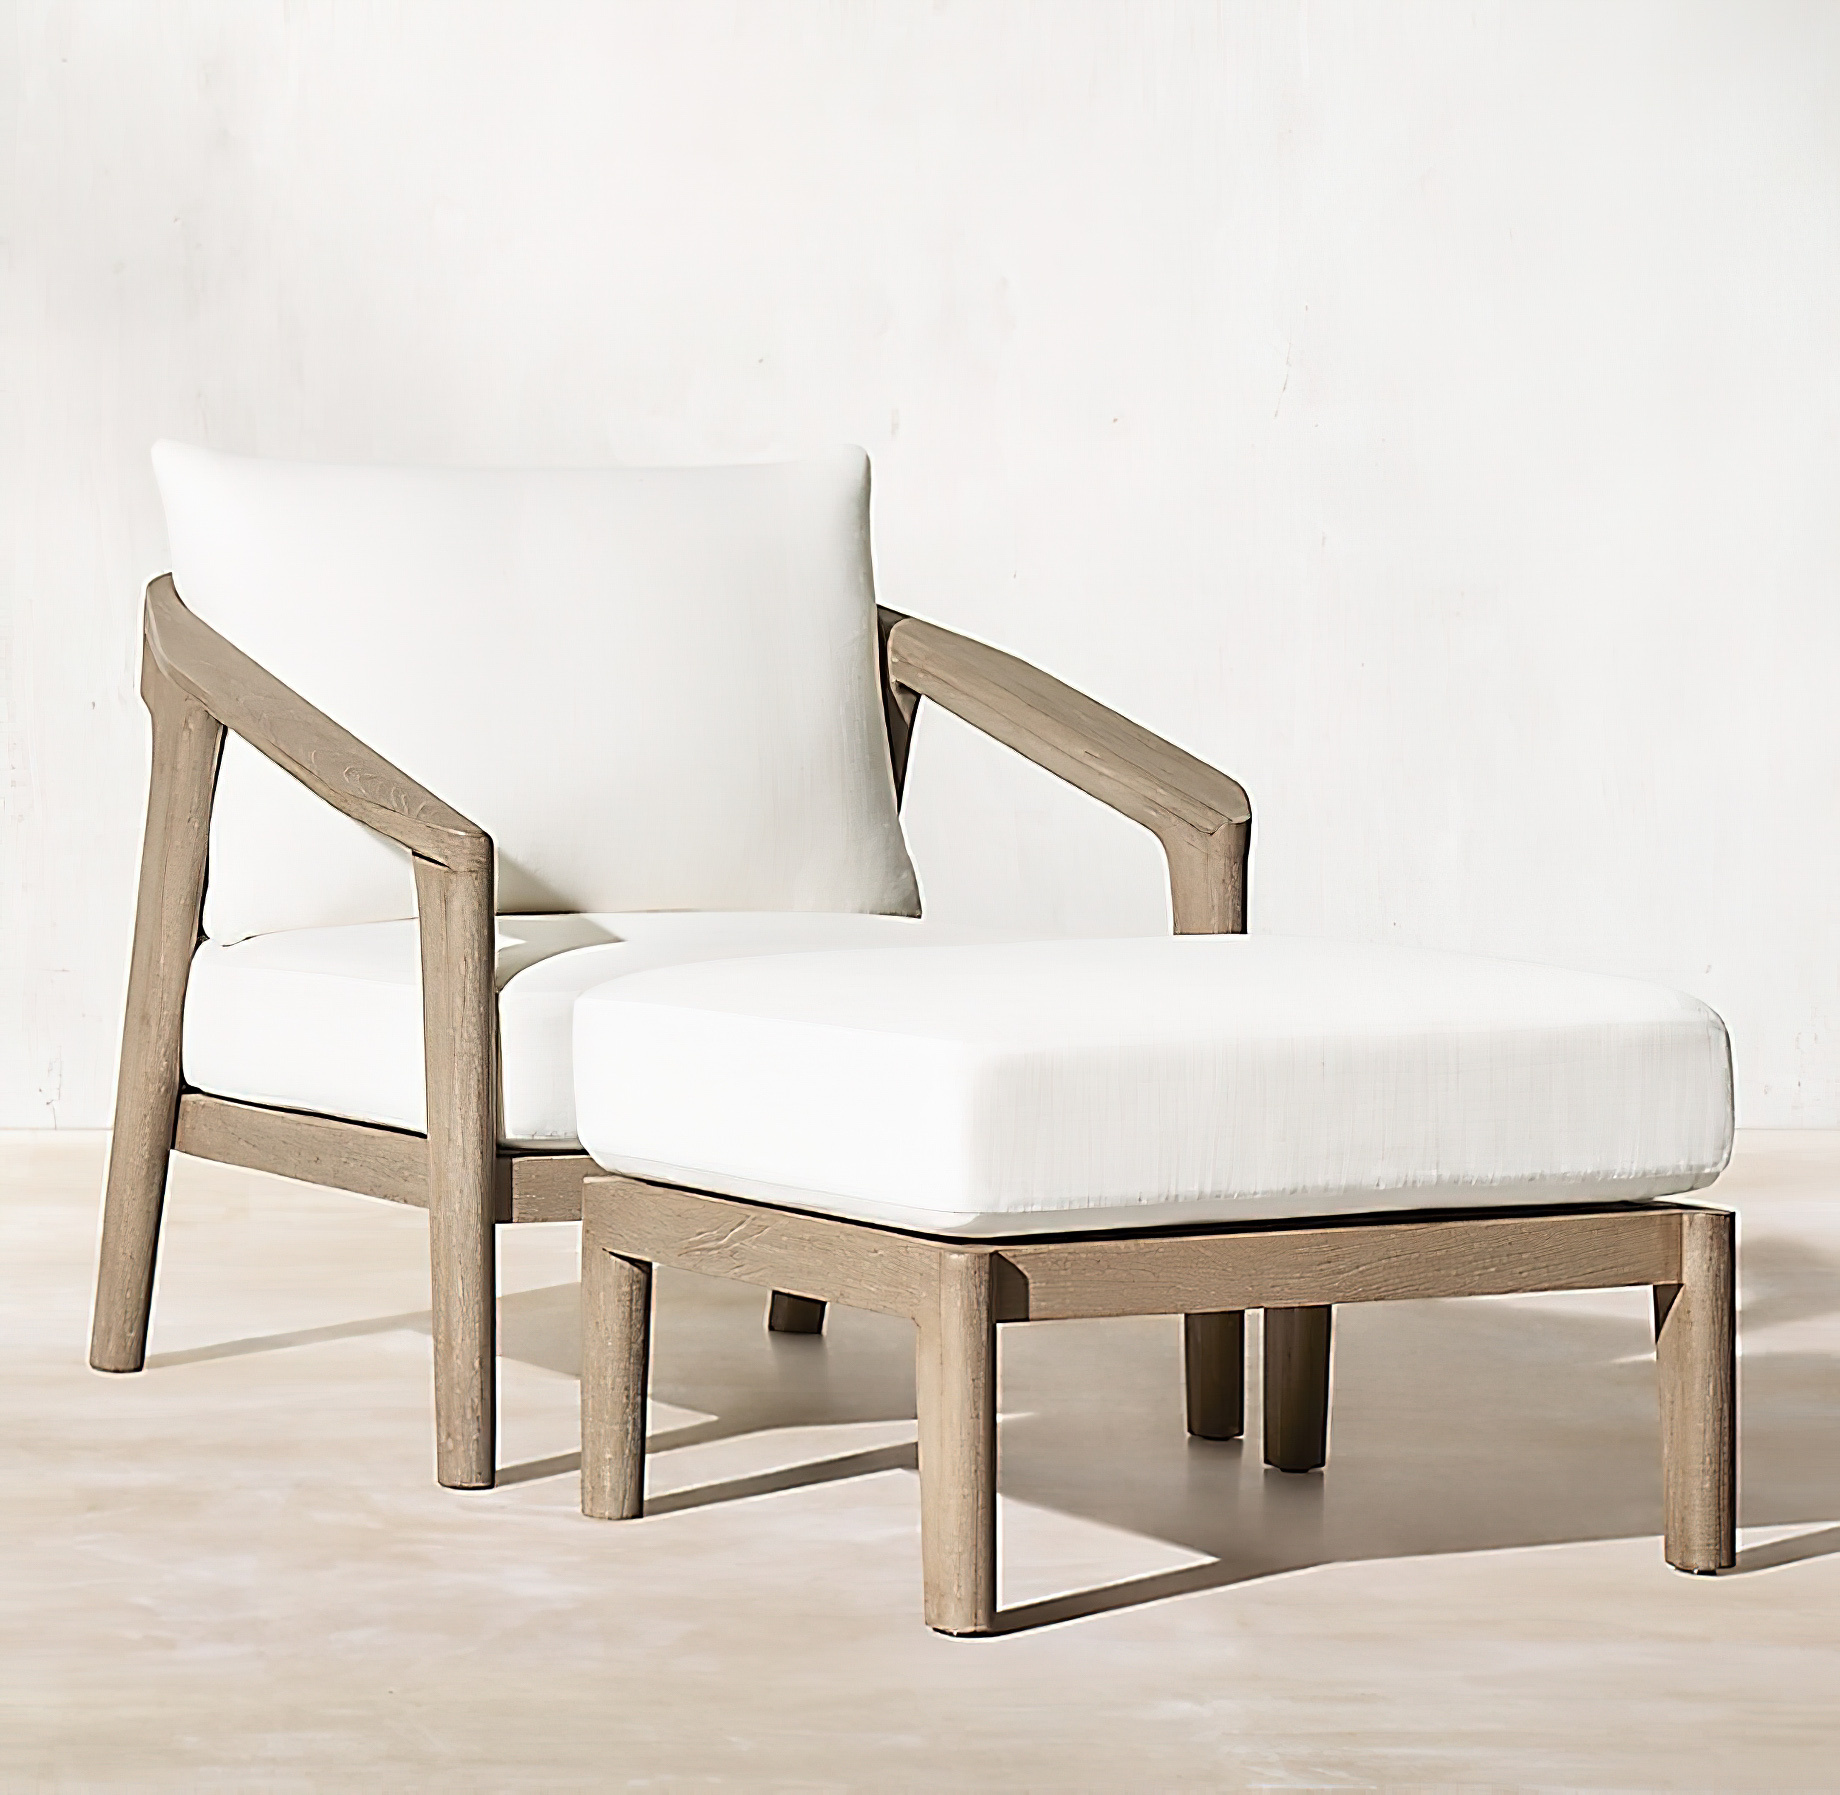 Malta Teak Collection Outdoor Furniture Design for RH – Ramon Esteve – Malta Teak Ottoman